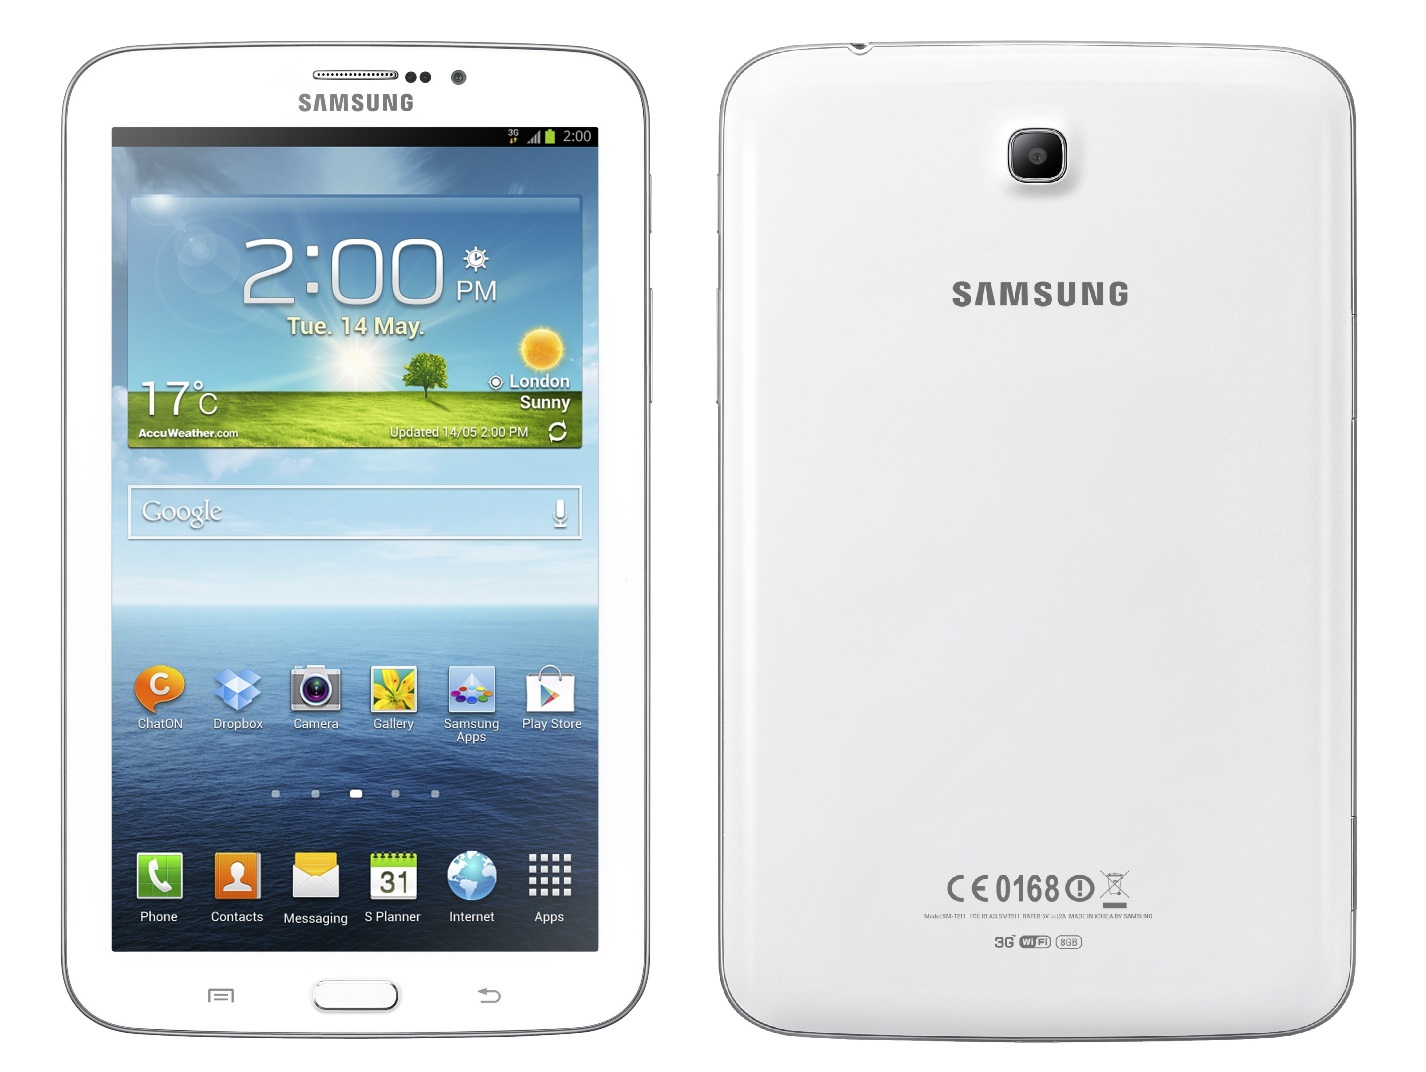 Samsung Galaxy Tab 3 7.0 inch - Notebookcheck.net External Reviews